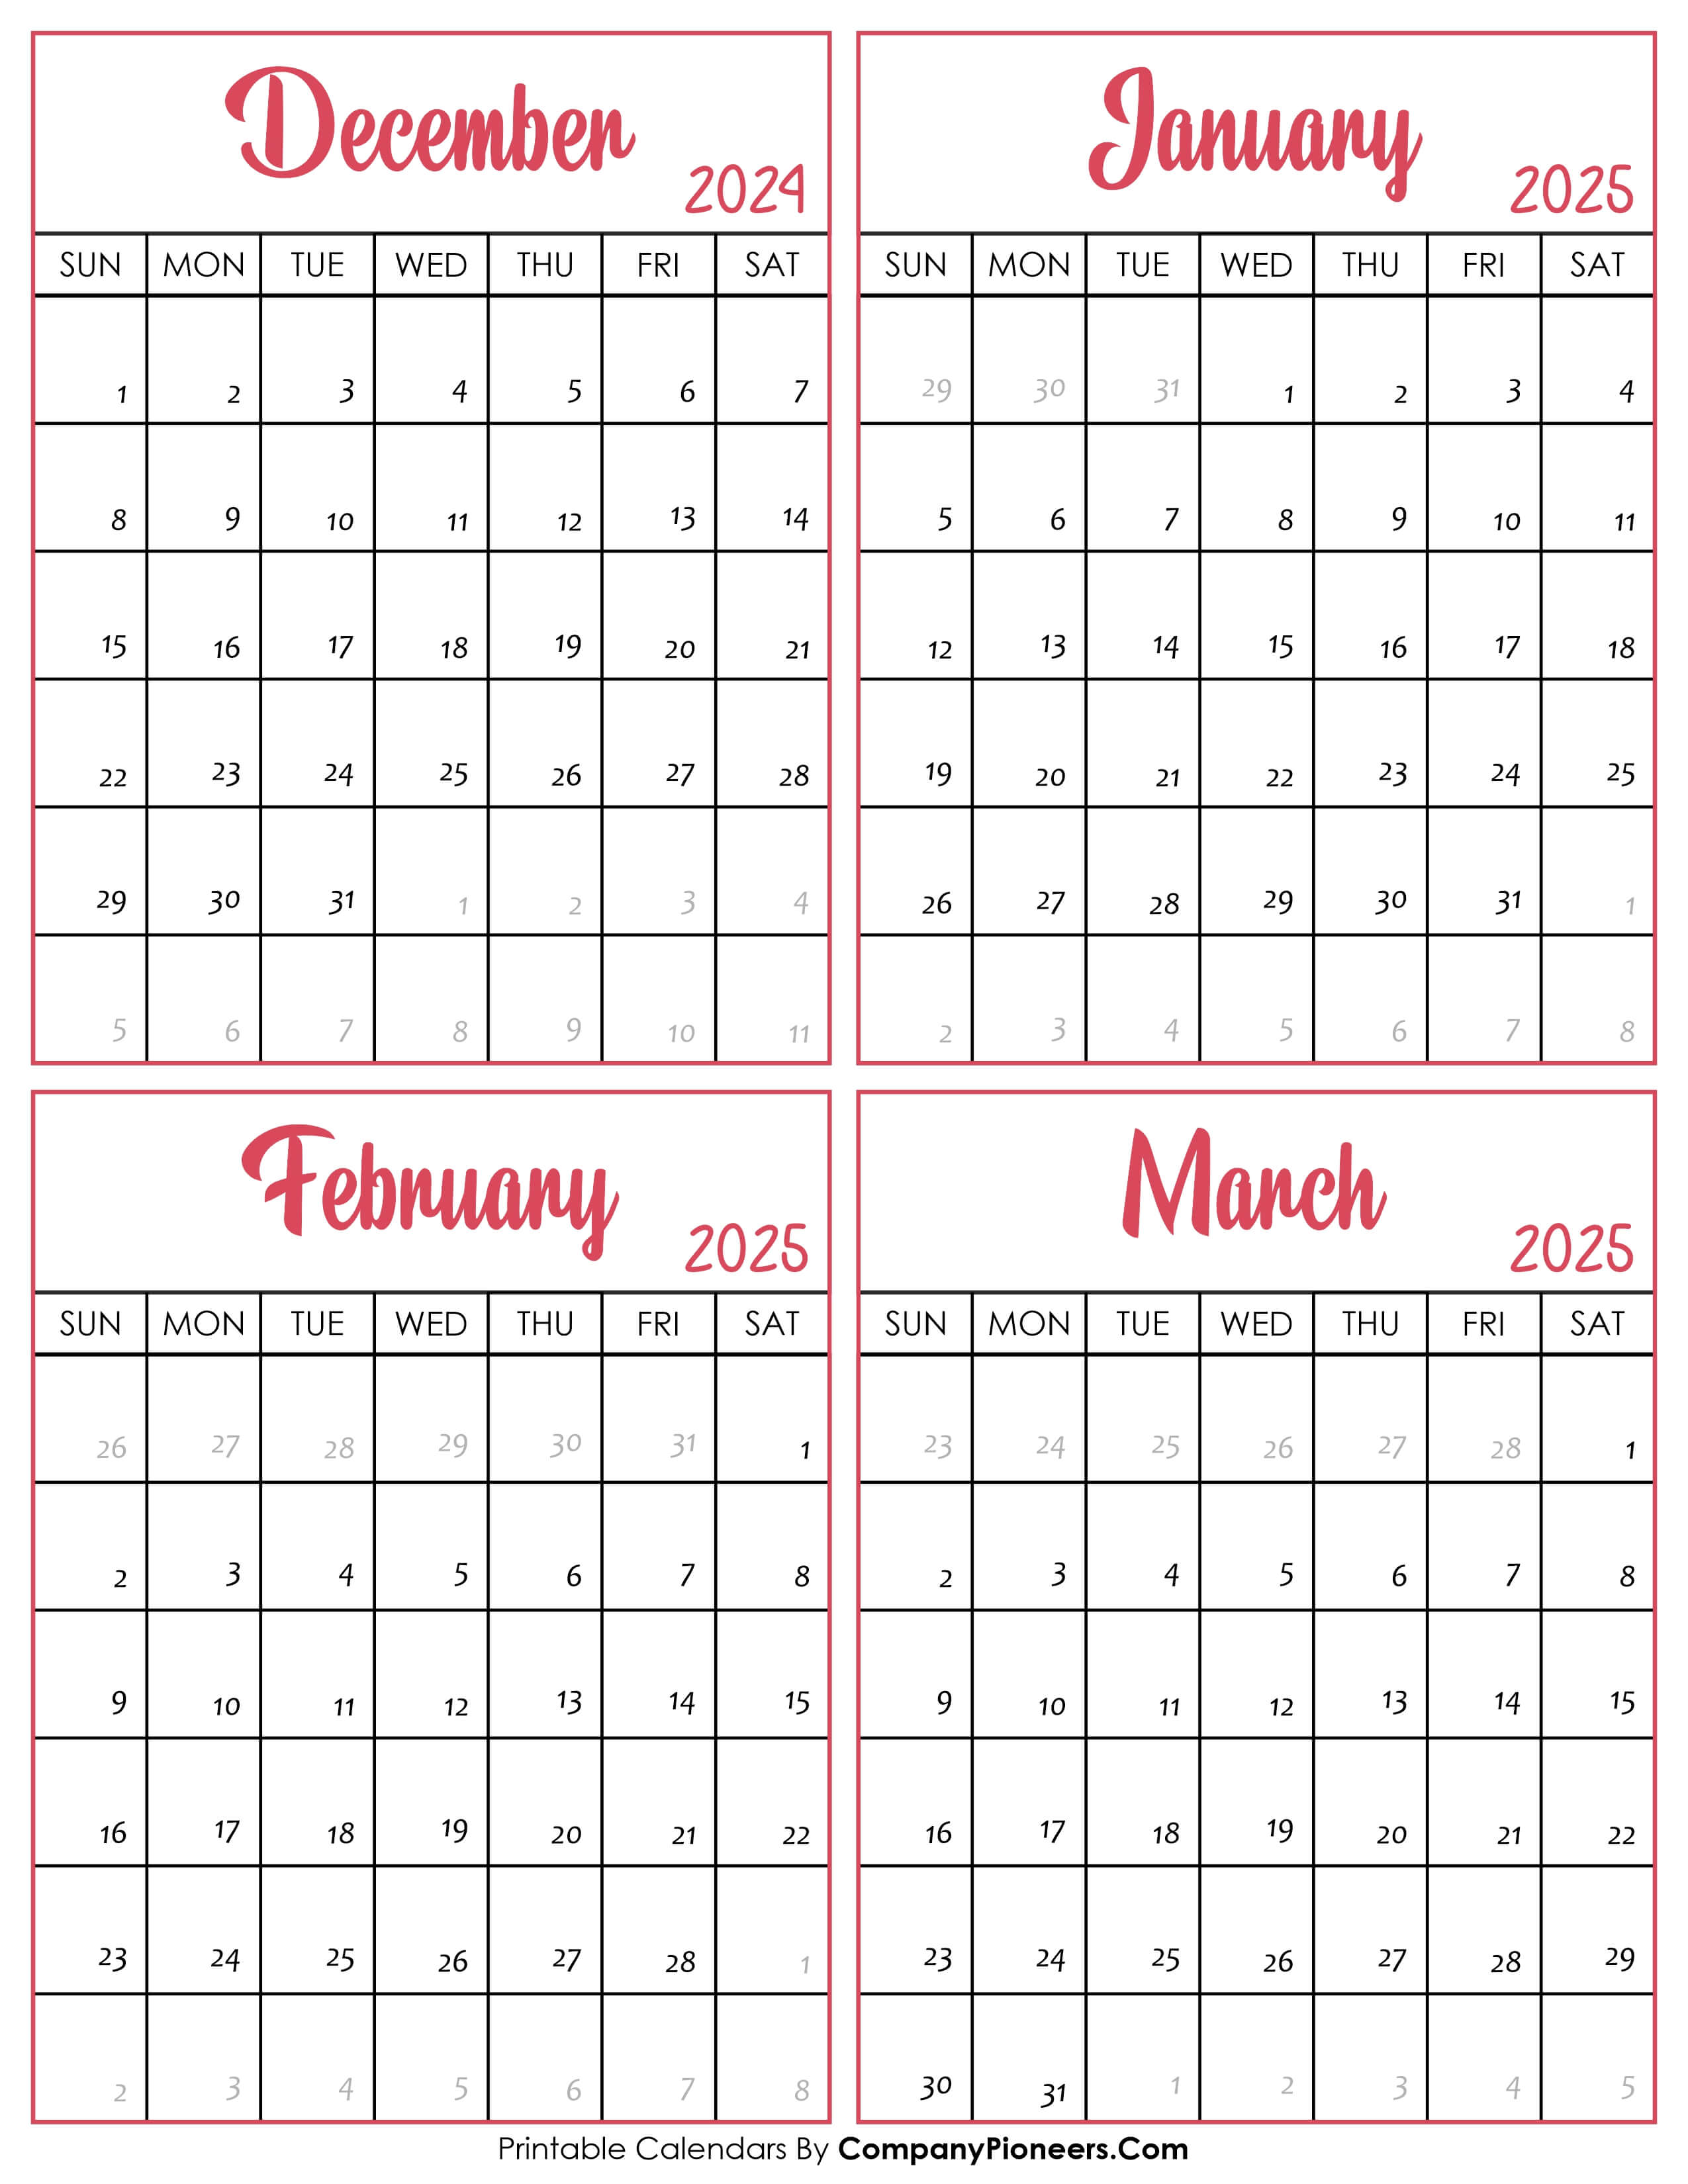 Calendar December 2024 to March 2025